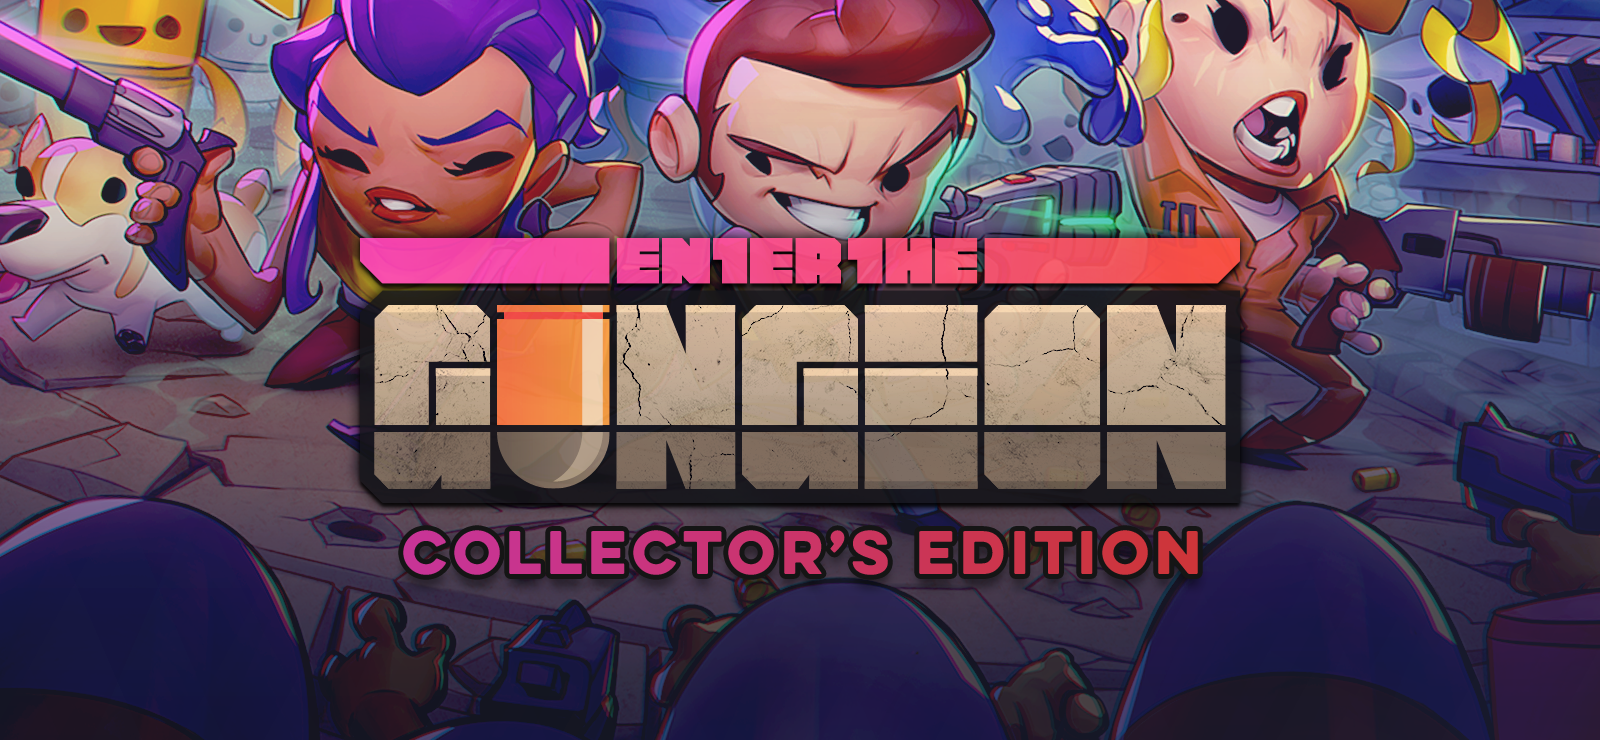 Enter The Gungeon Collector's Edition Upgrade